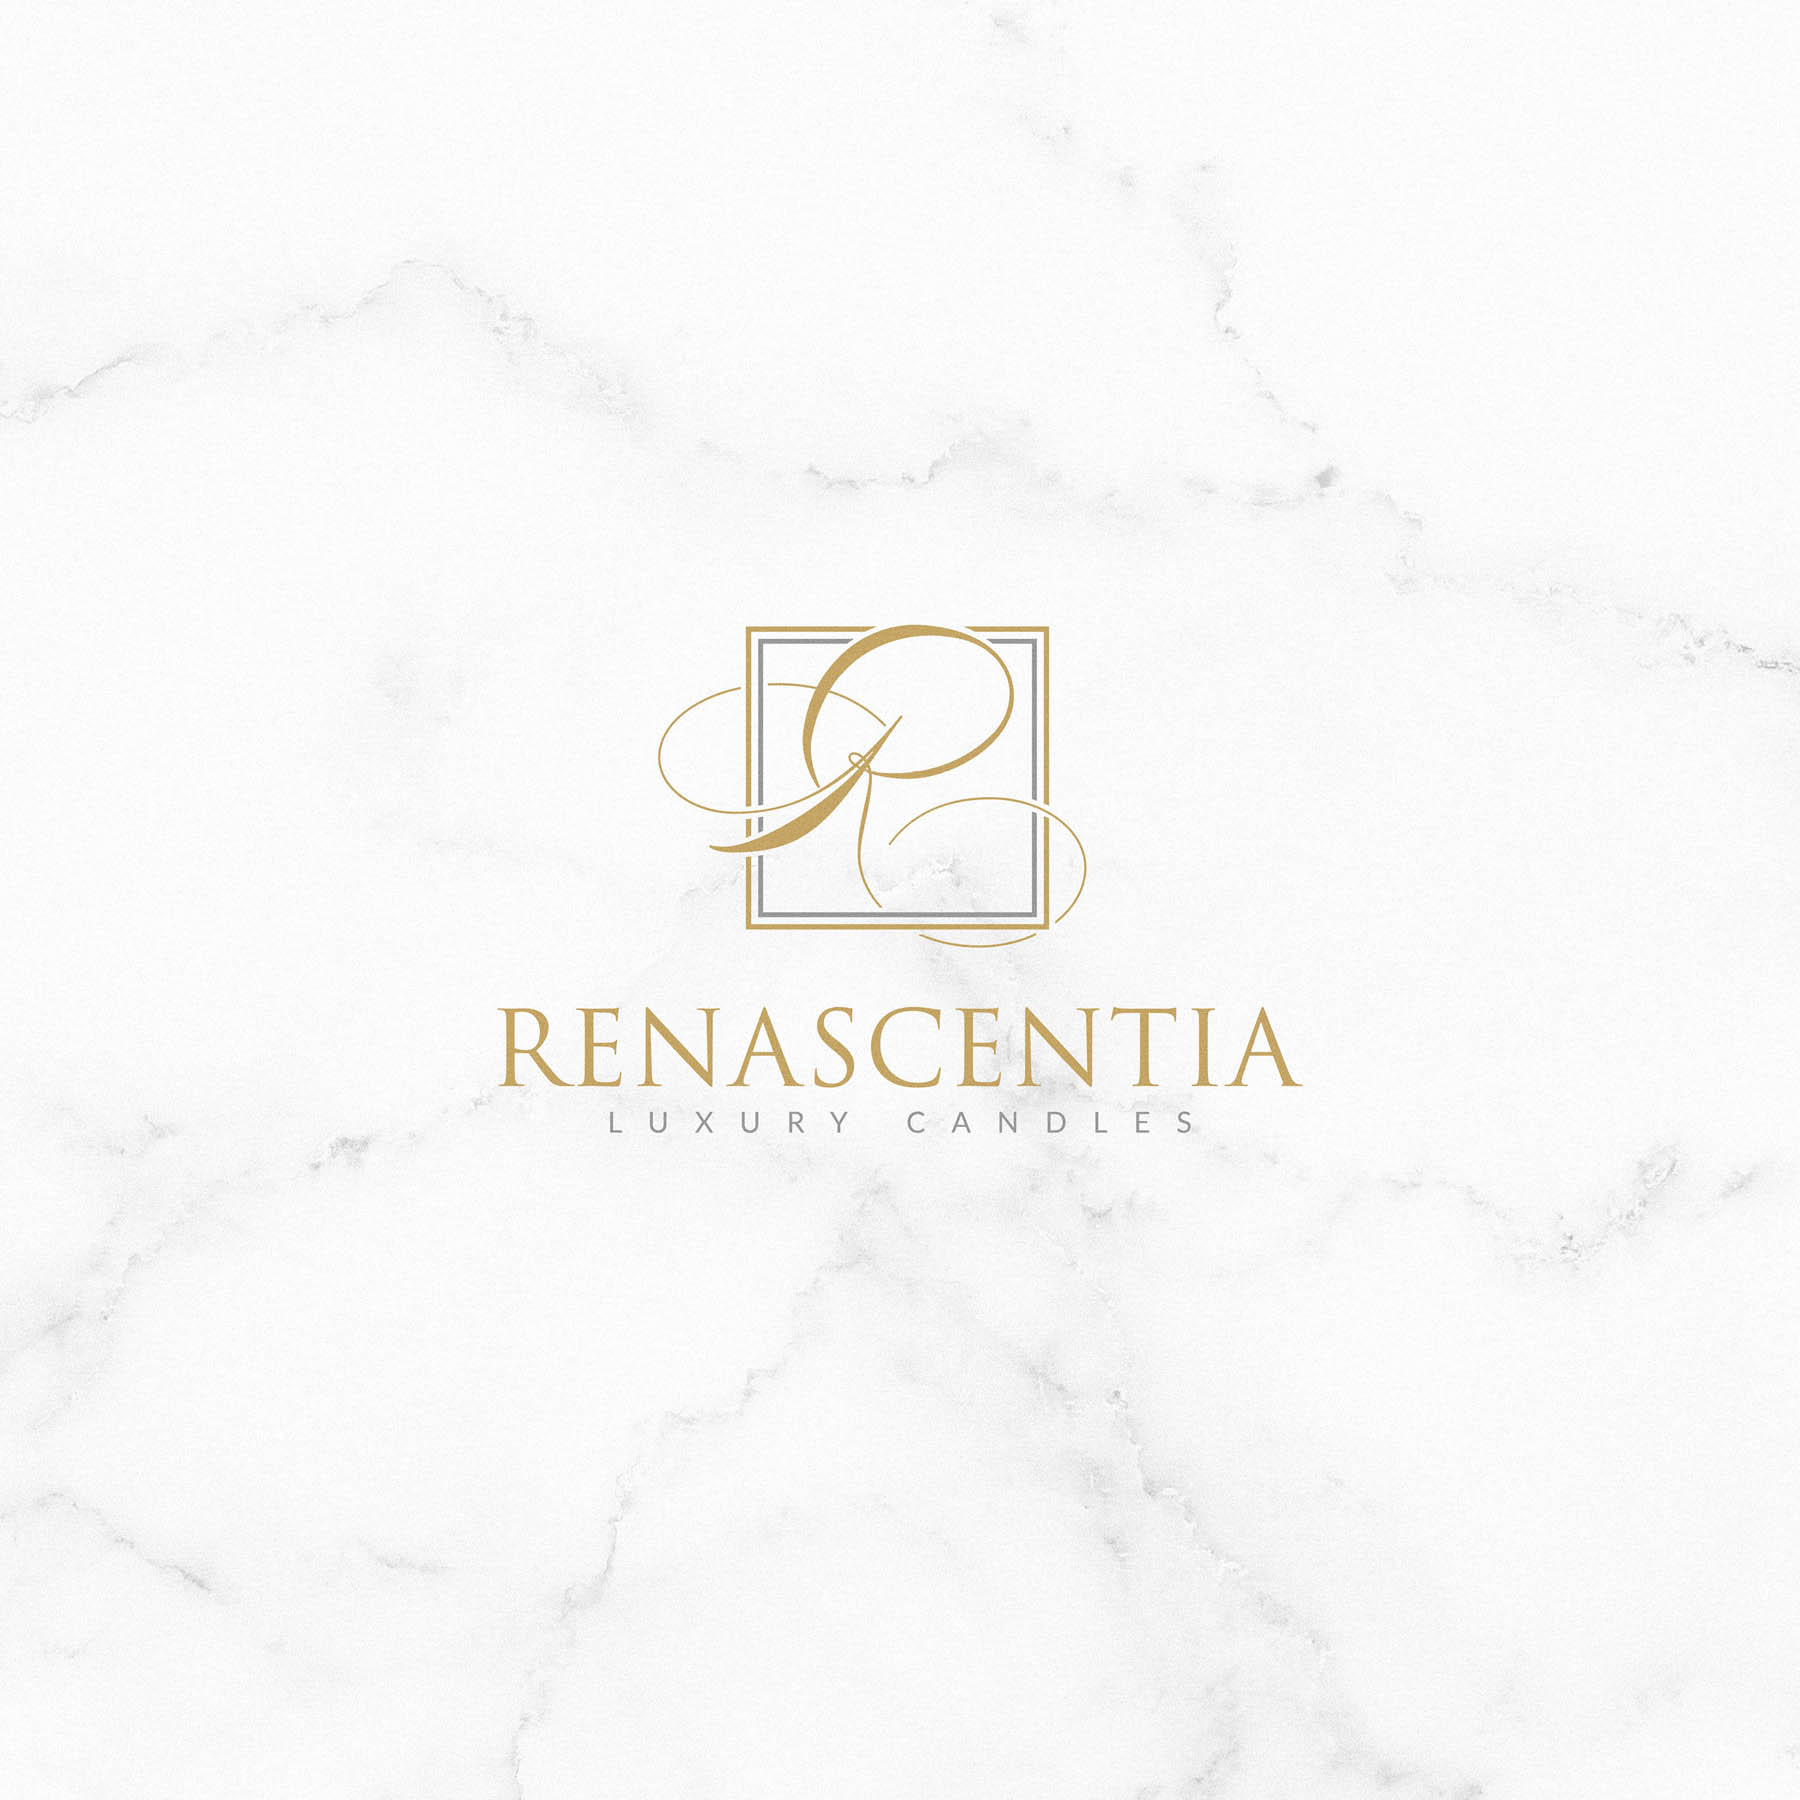 Renascentia luxury candle brand identity logo design london10